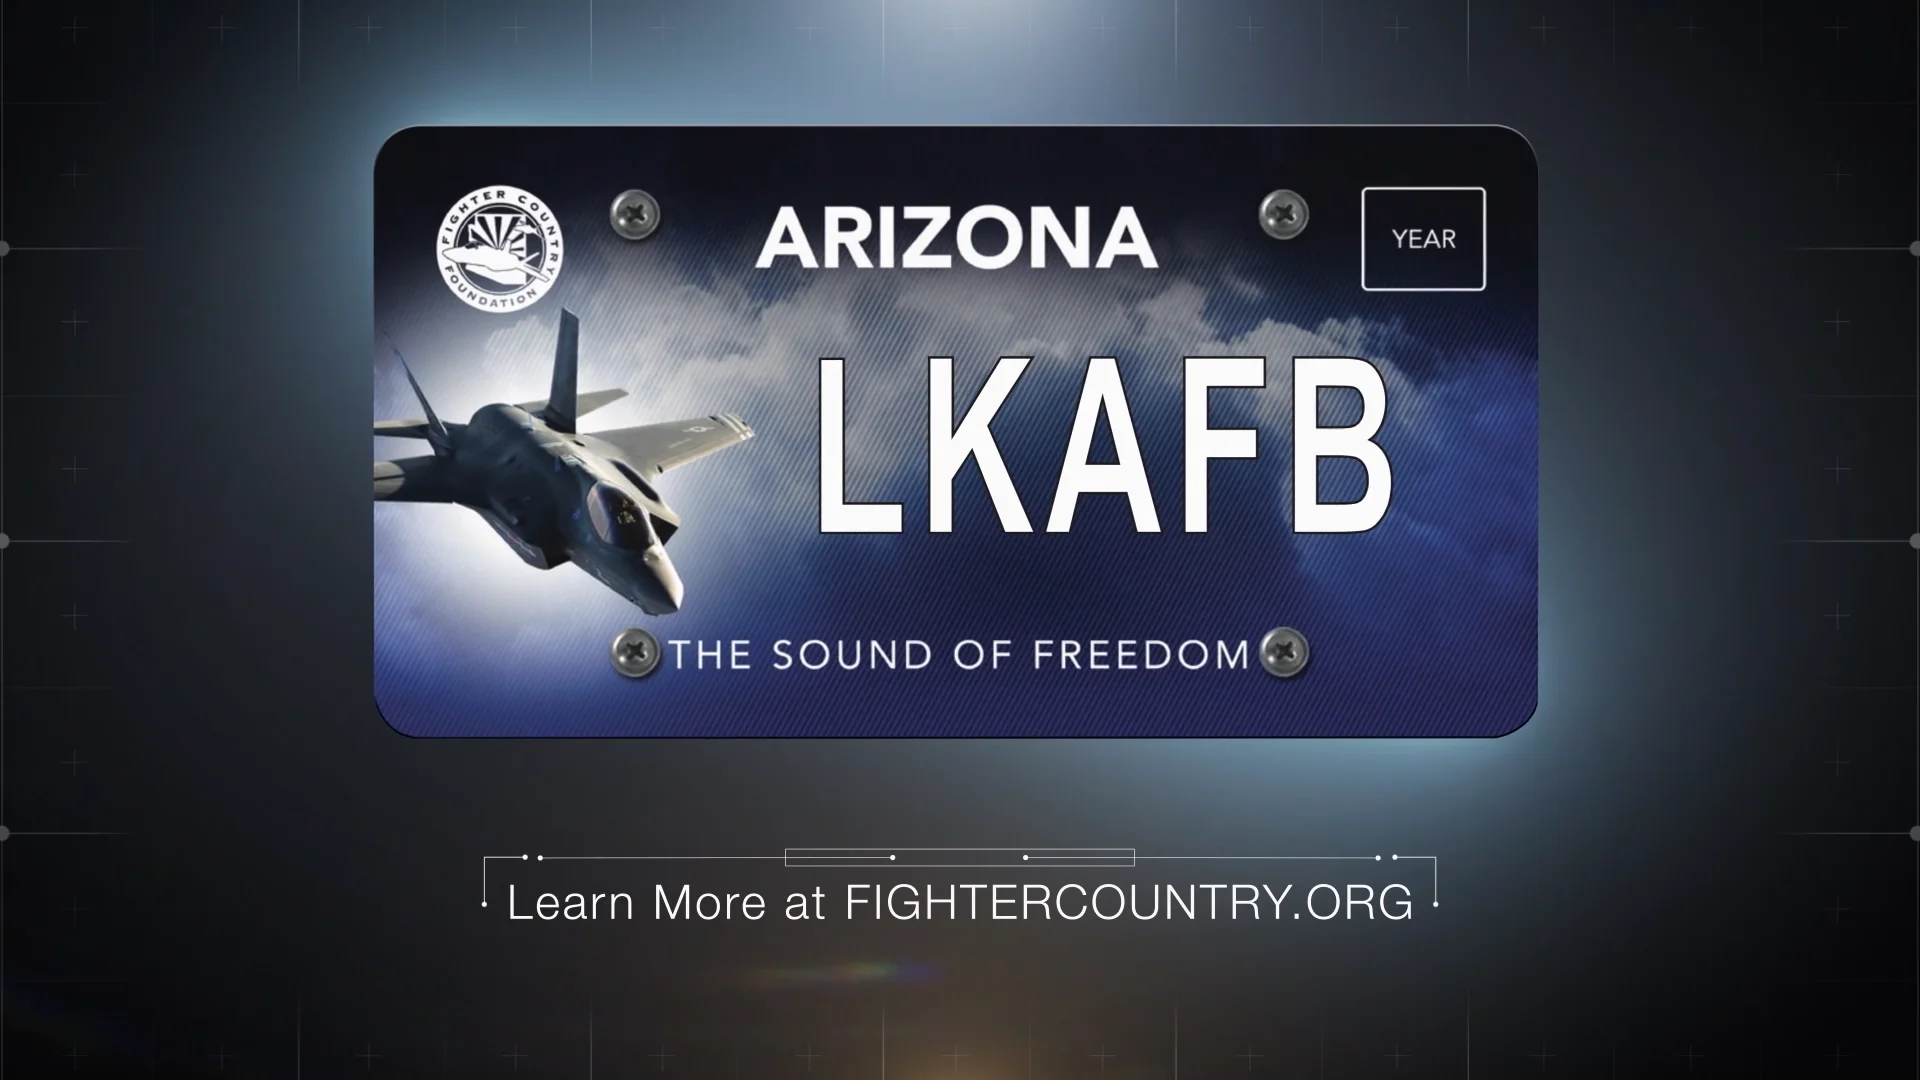 Arizona Sound of Freedom License Plates on Vimeo